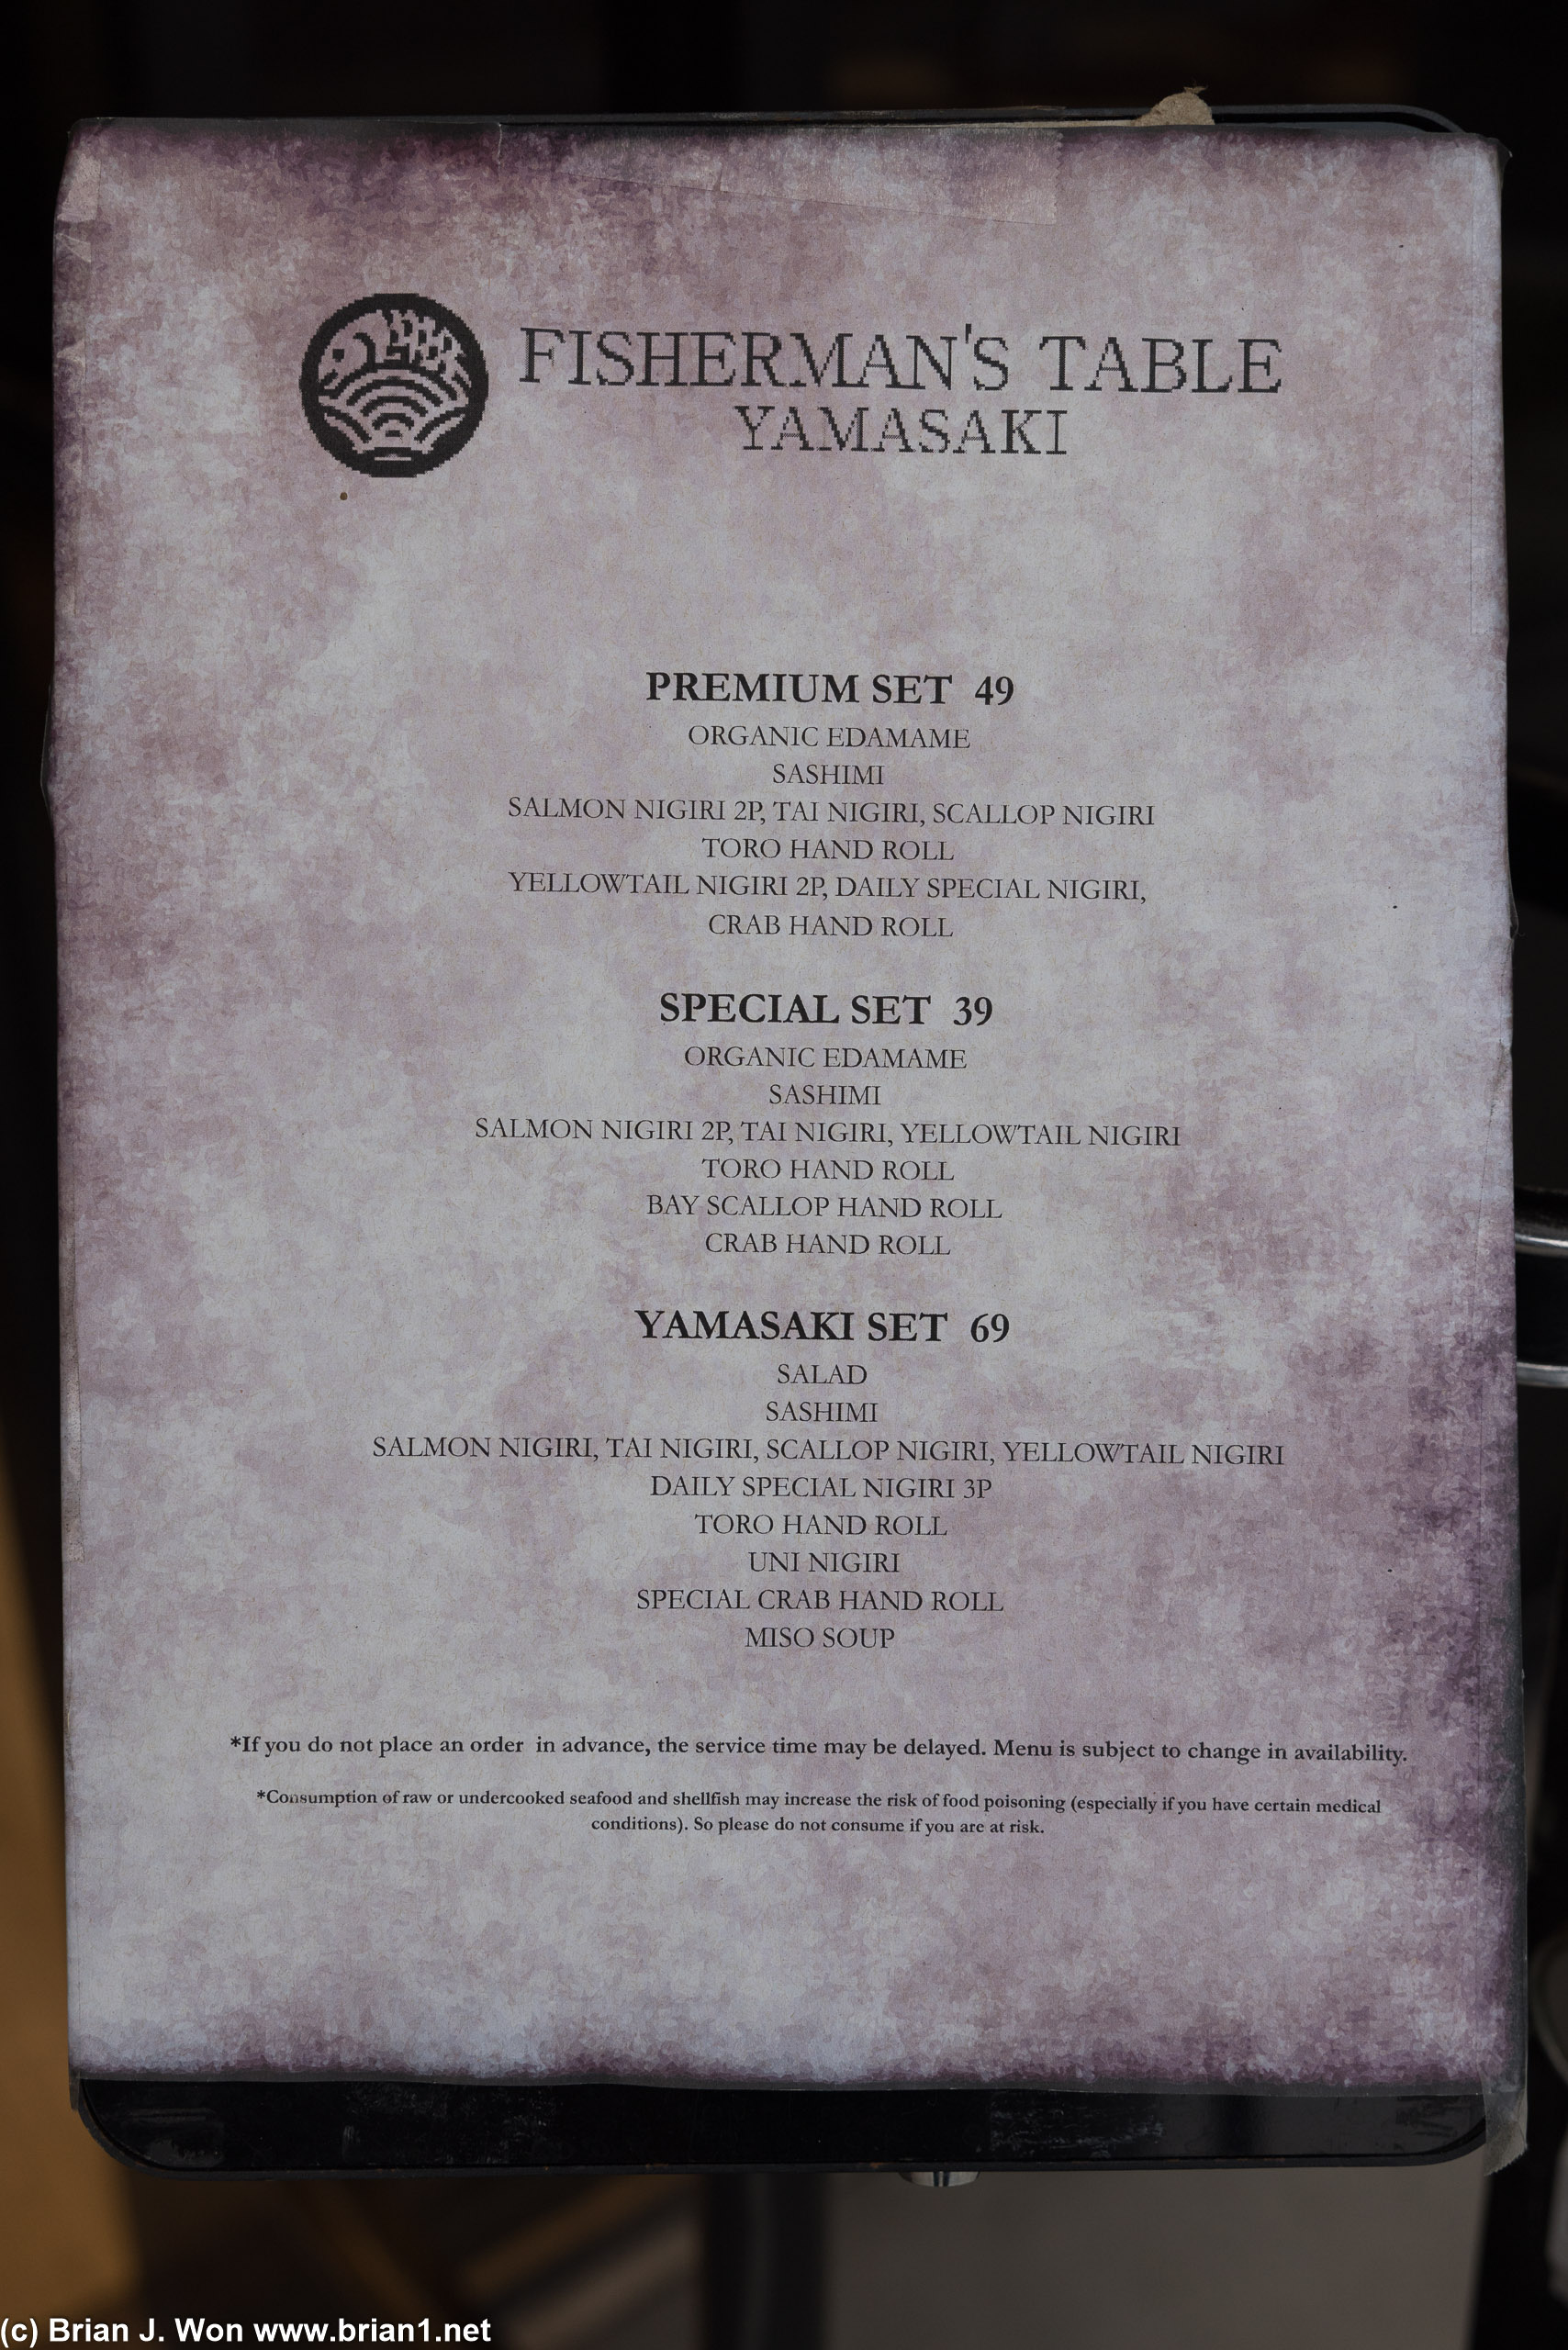 Fisherman's Table Yamasaki menu.